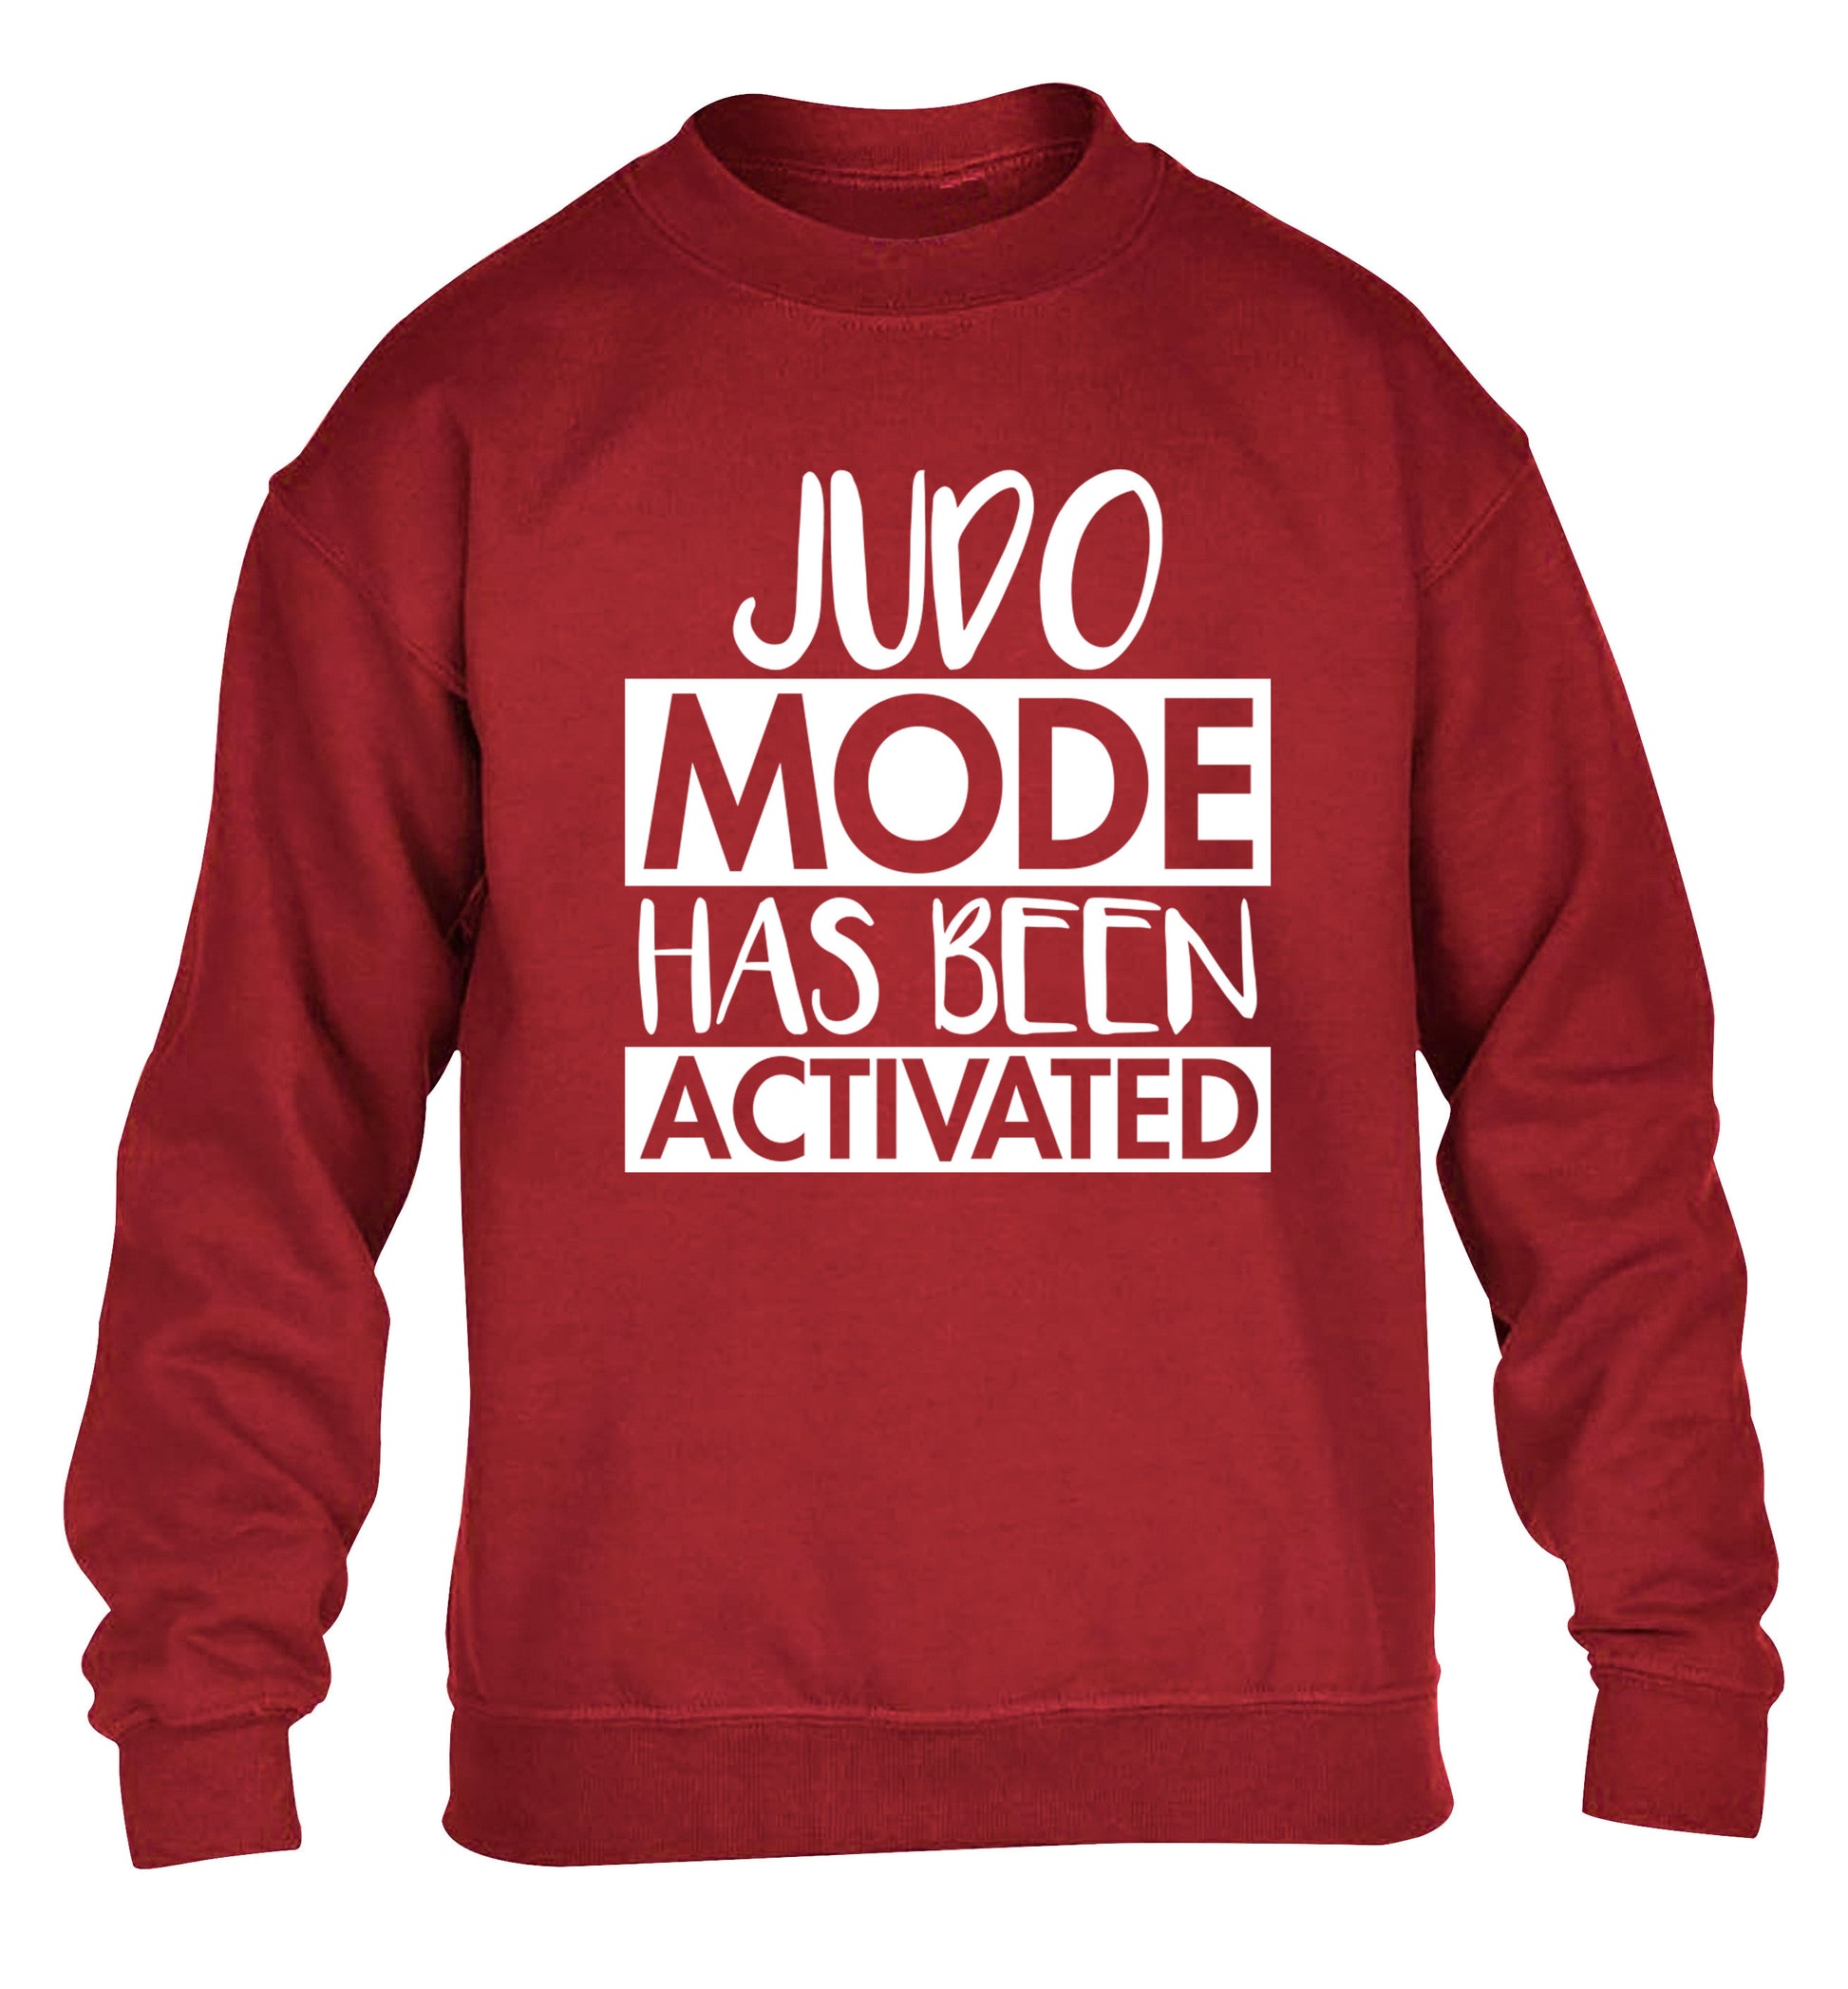 Judo mode activated children's grey sweater 12-14 Years